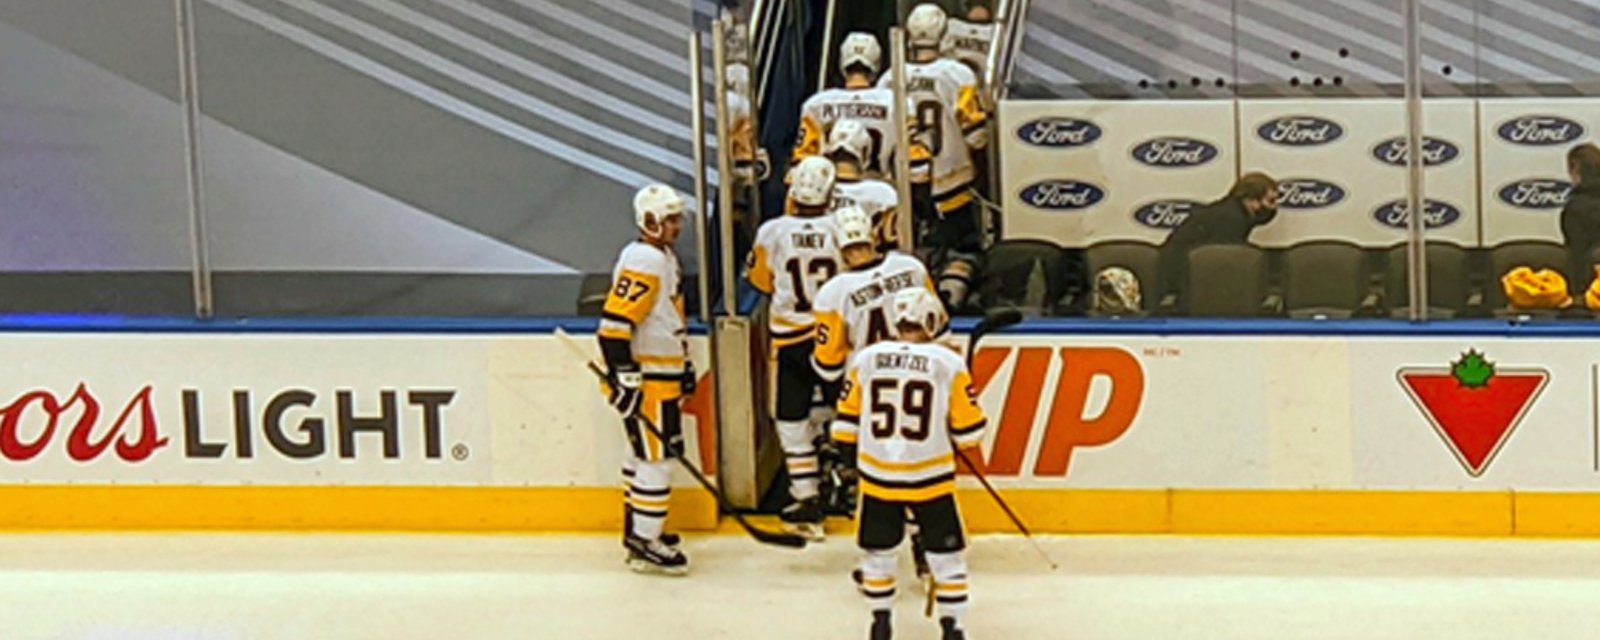 Crosby and Letang both take ownership of shocking Penguins loss 